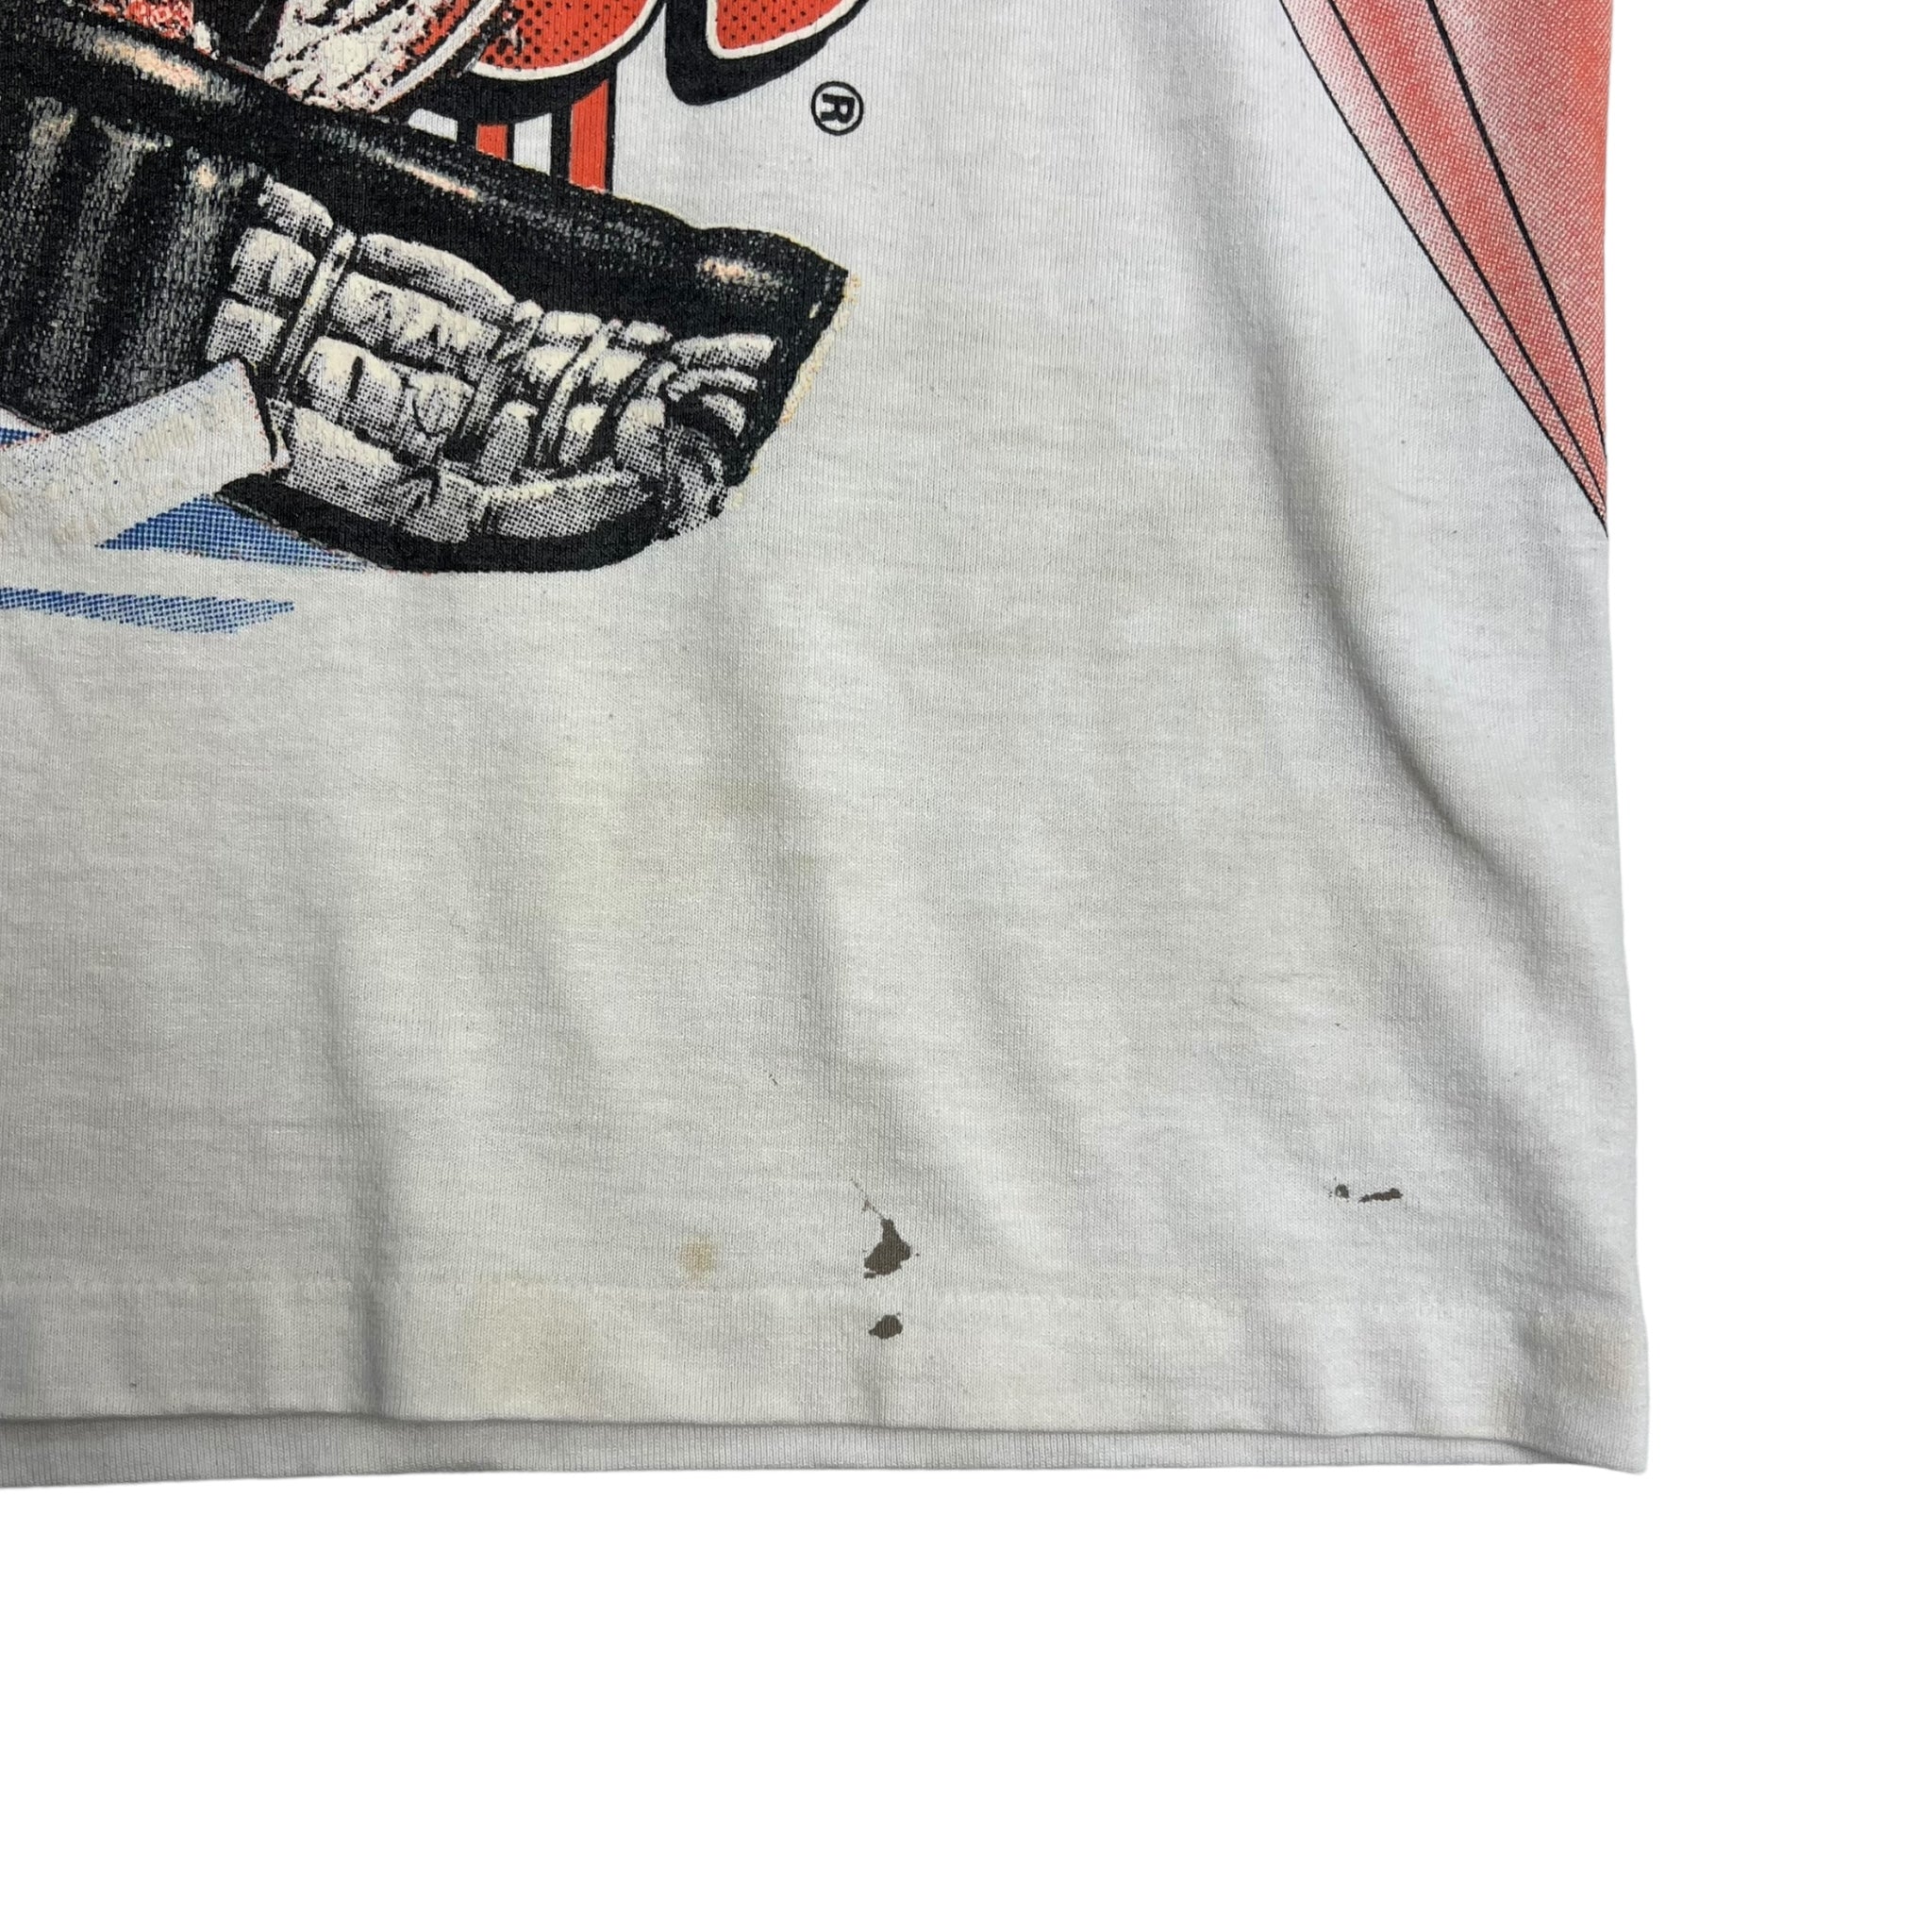 1992 Bulletin Philadelphia Flyers T-shirt - Hockey Team T-Shirt